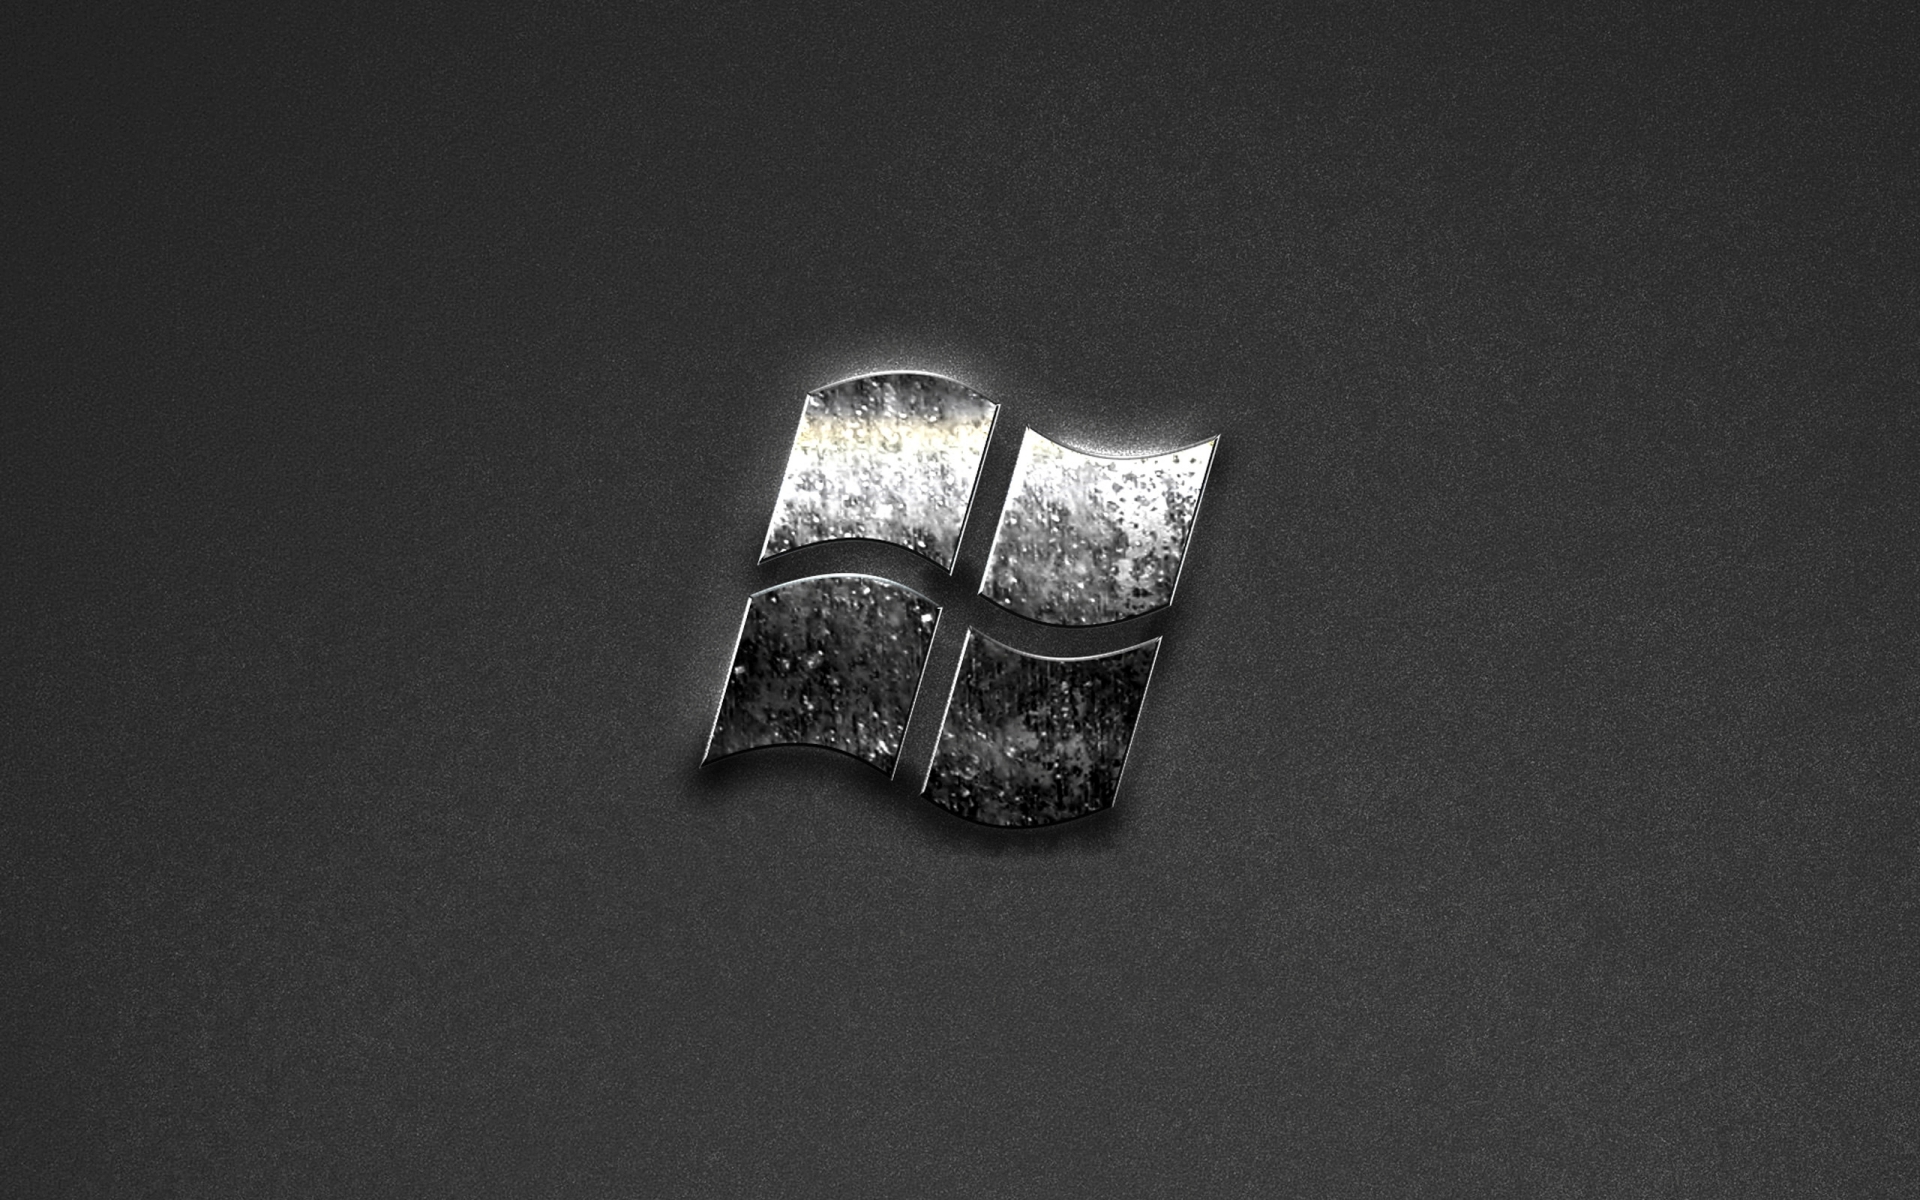 windows-logo-creative-metal-emblem-gray-background-1920x1200.jpg